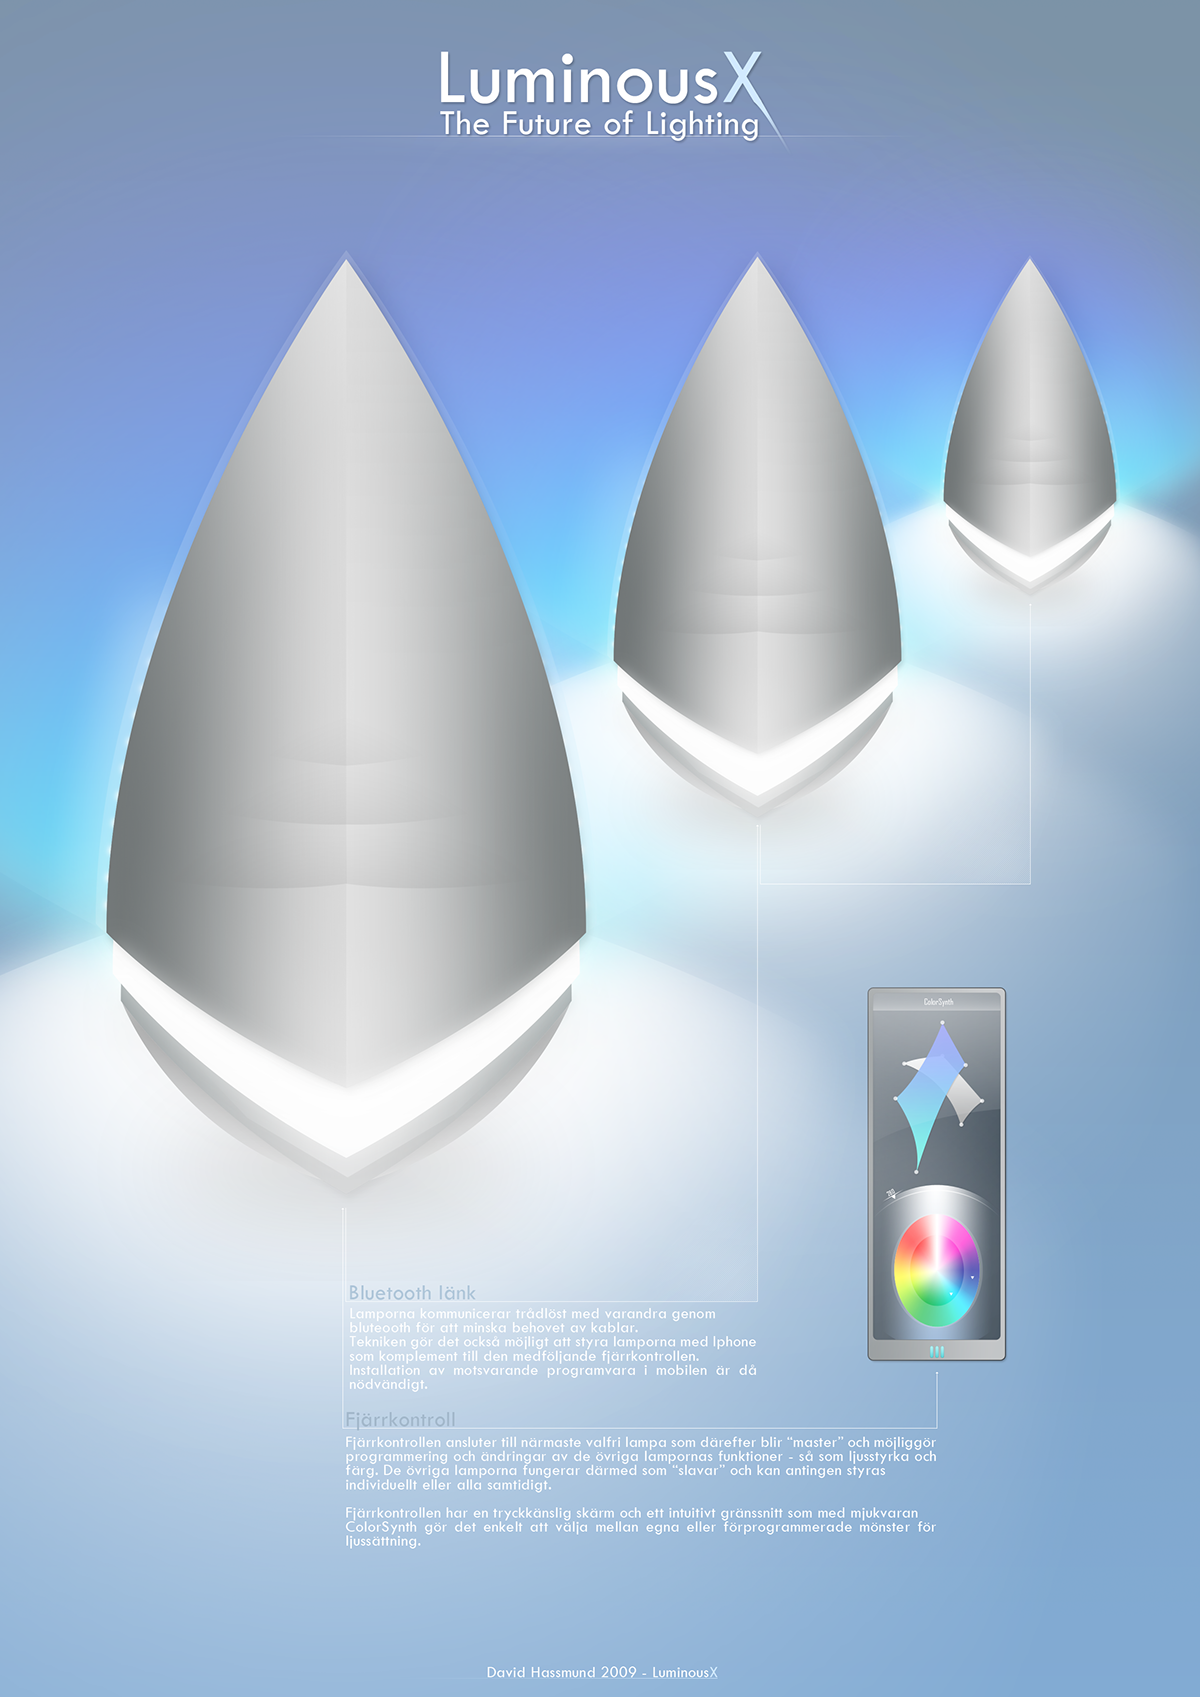 wall lamp luminous X lamp concept color lamp phillips living colors David Hassmund colors LED-lamp wireless